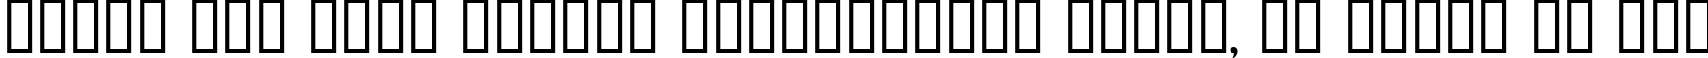 Пример написания шрифтом Dumbledor 3 Rev Italic текста на русском